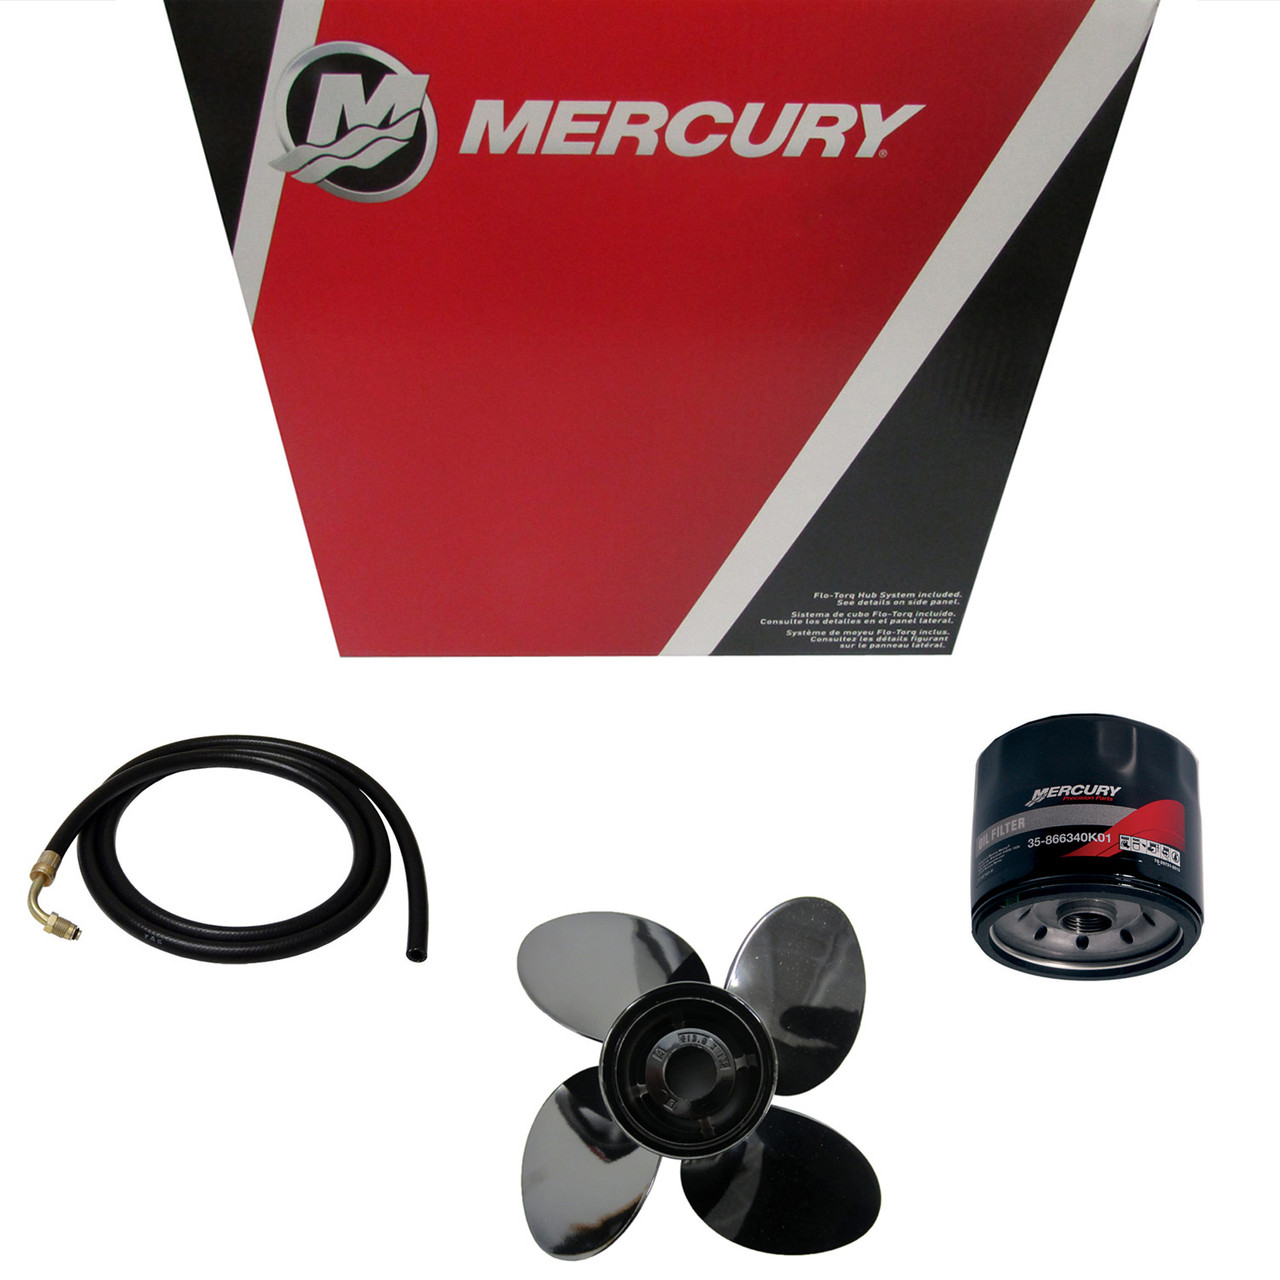 Mercury Marine / Mercruiser New OEM Connector, 856594